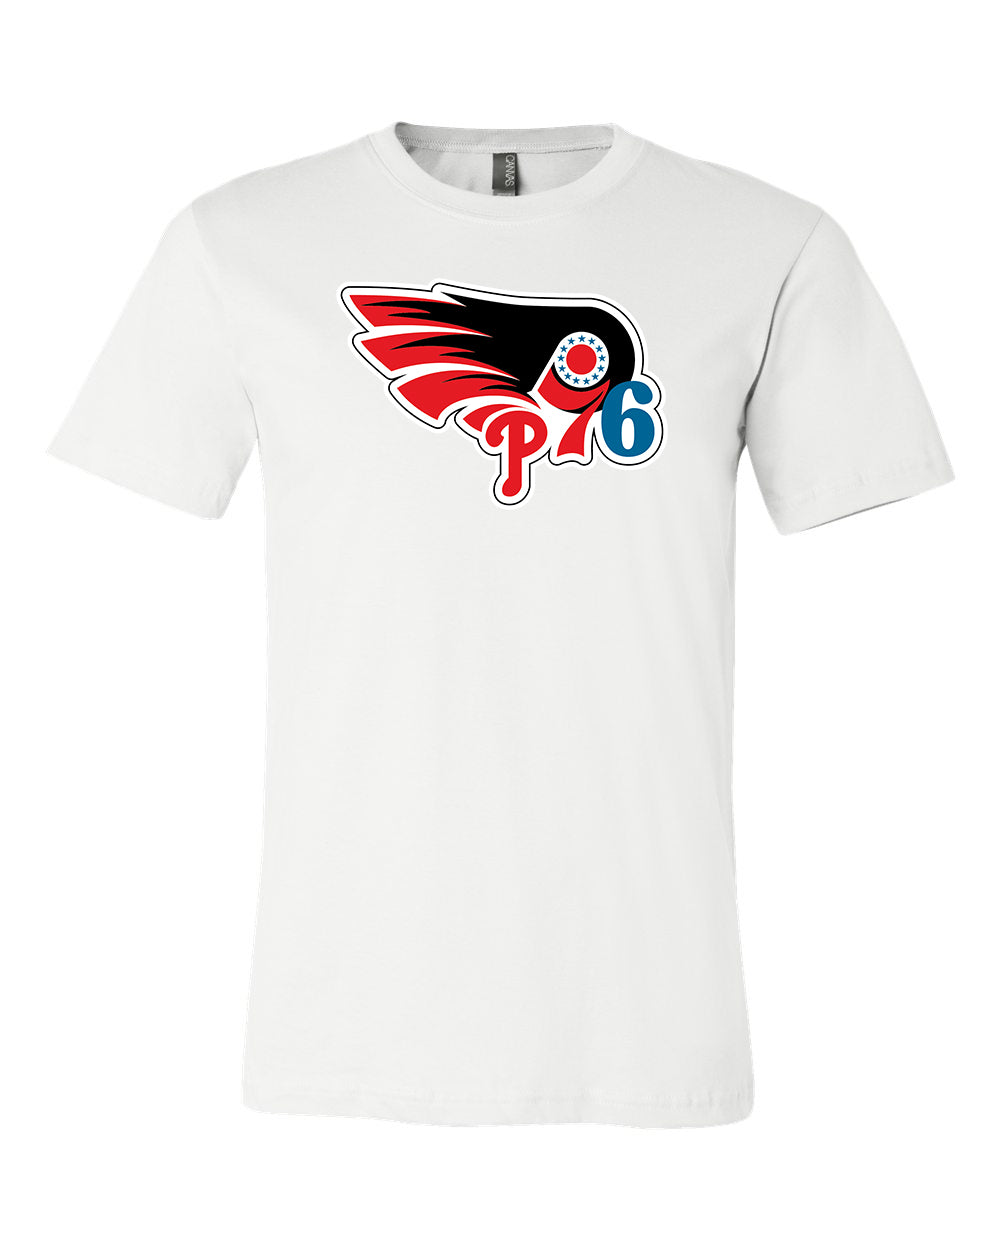 EoP White Logo Short-Sleeve Unisex T-Shirt - Edge of Philly Sports